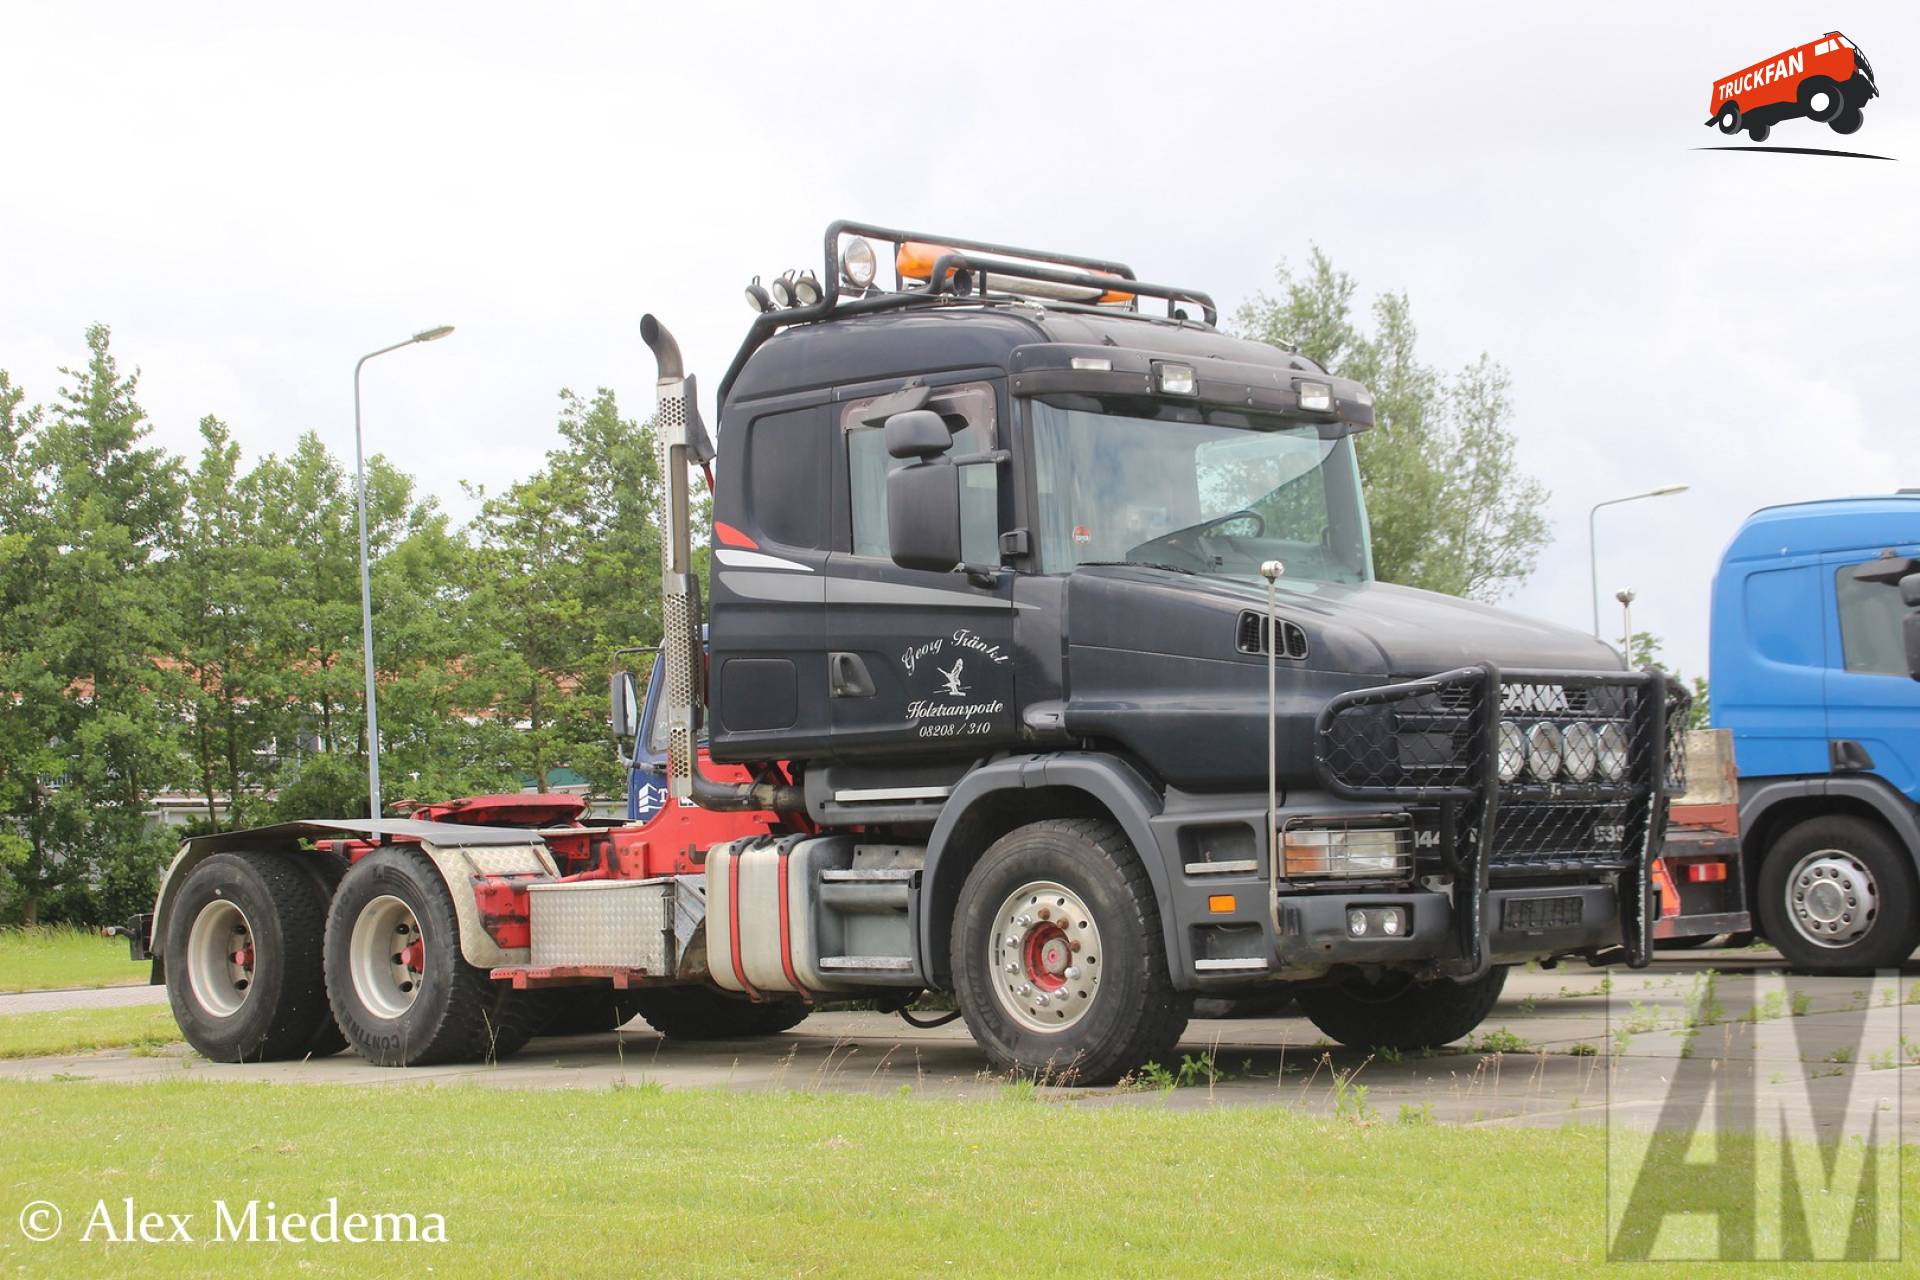 Scania T144